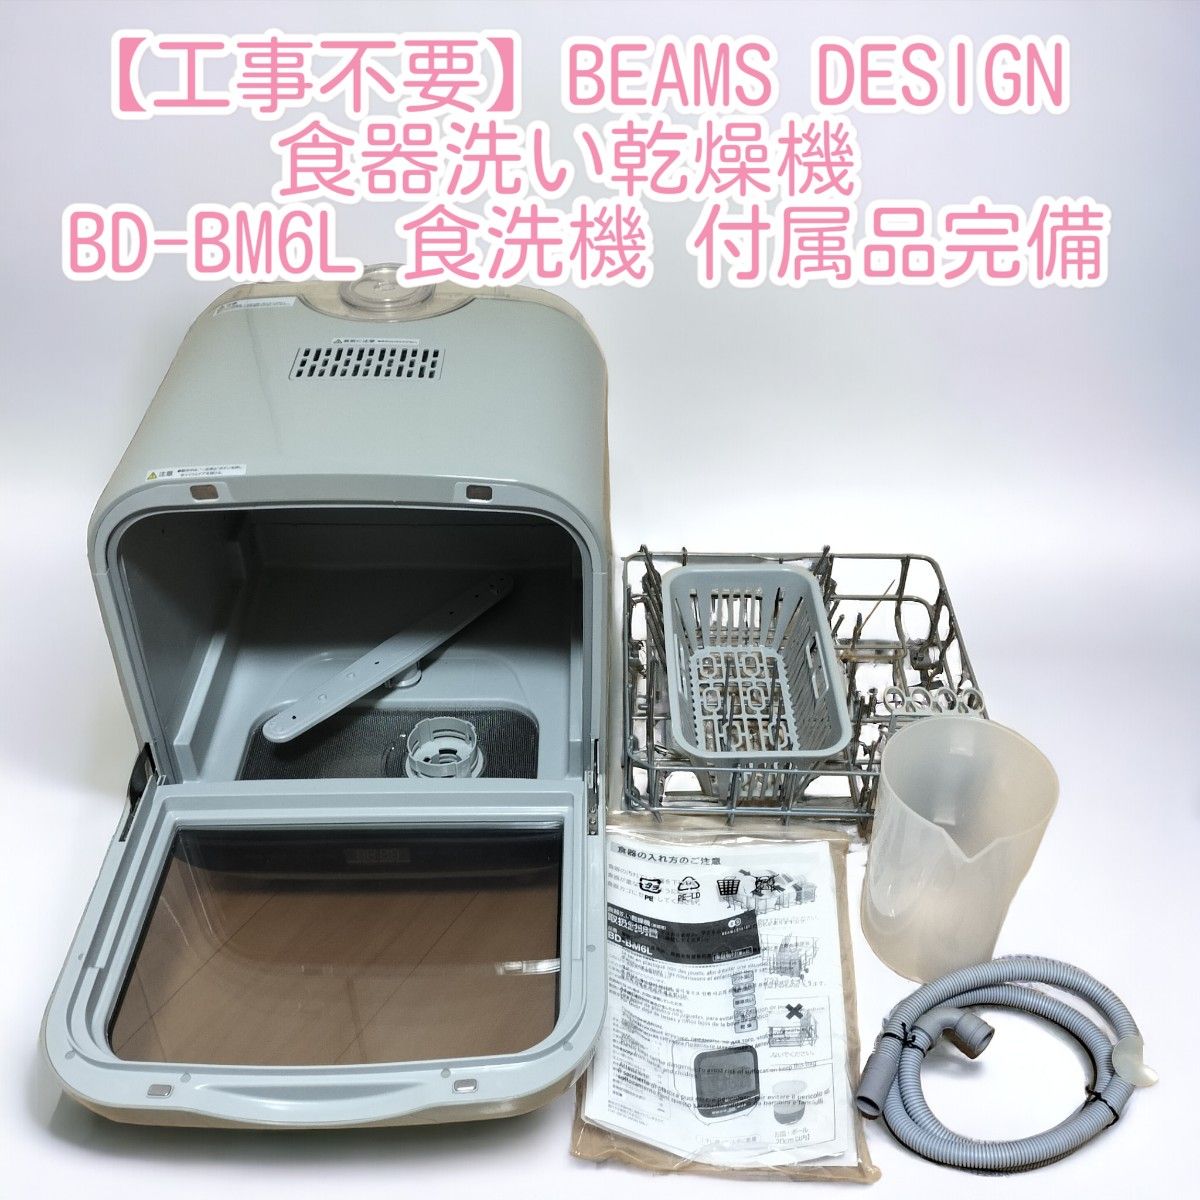 【良品】BEAMS DESIGN 食器洗い乾燥機 BD-BM6L 食洗機 